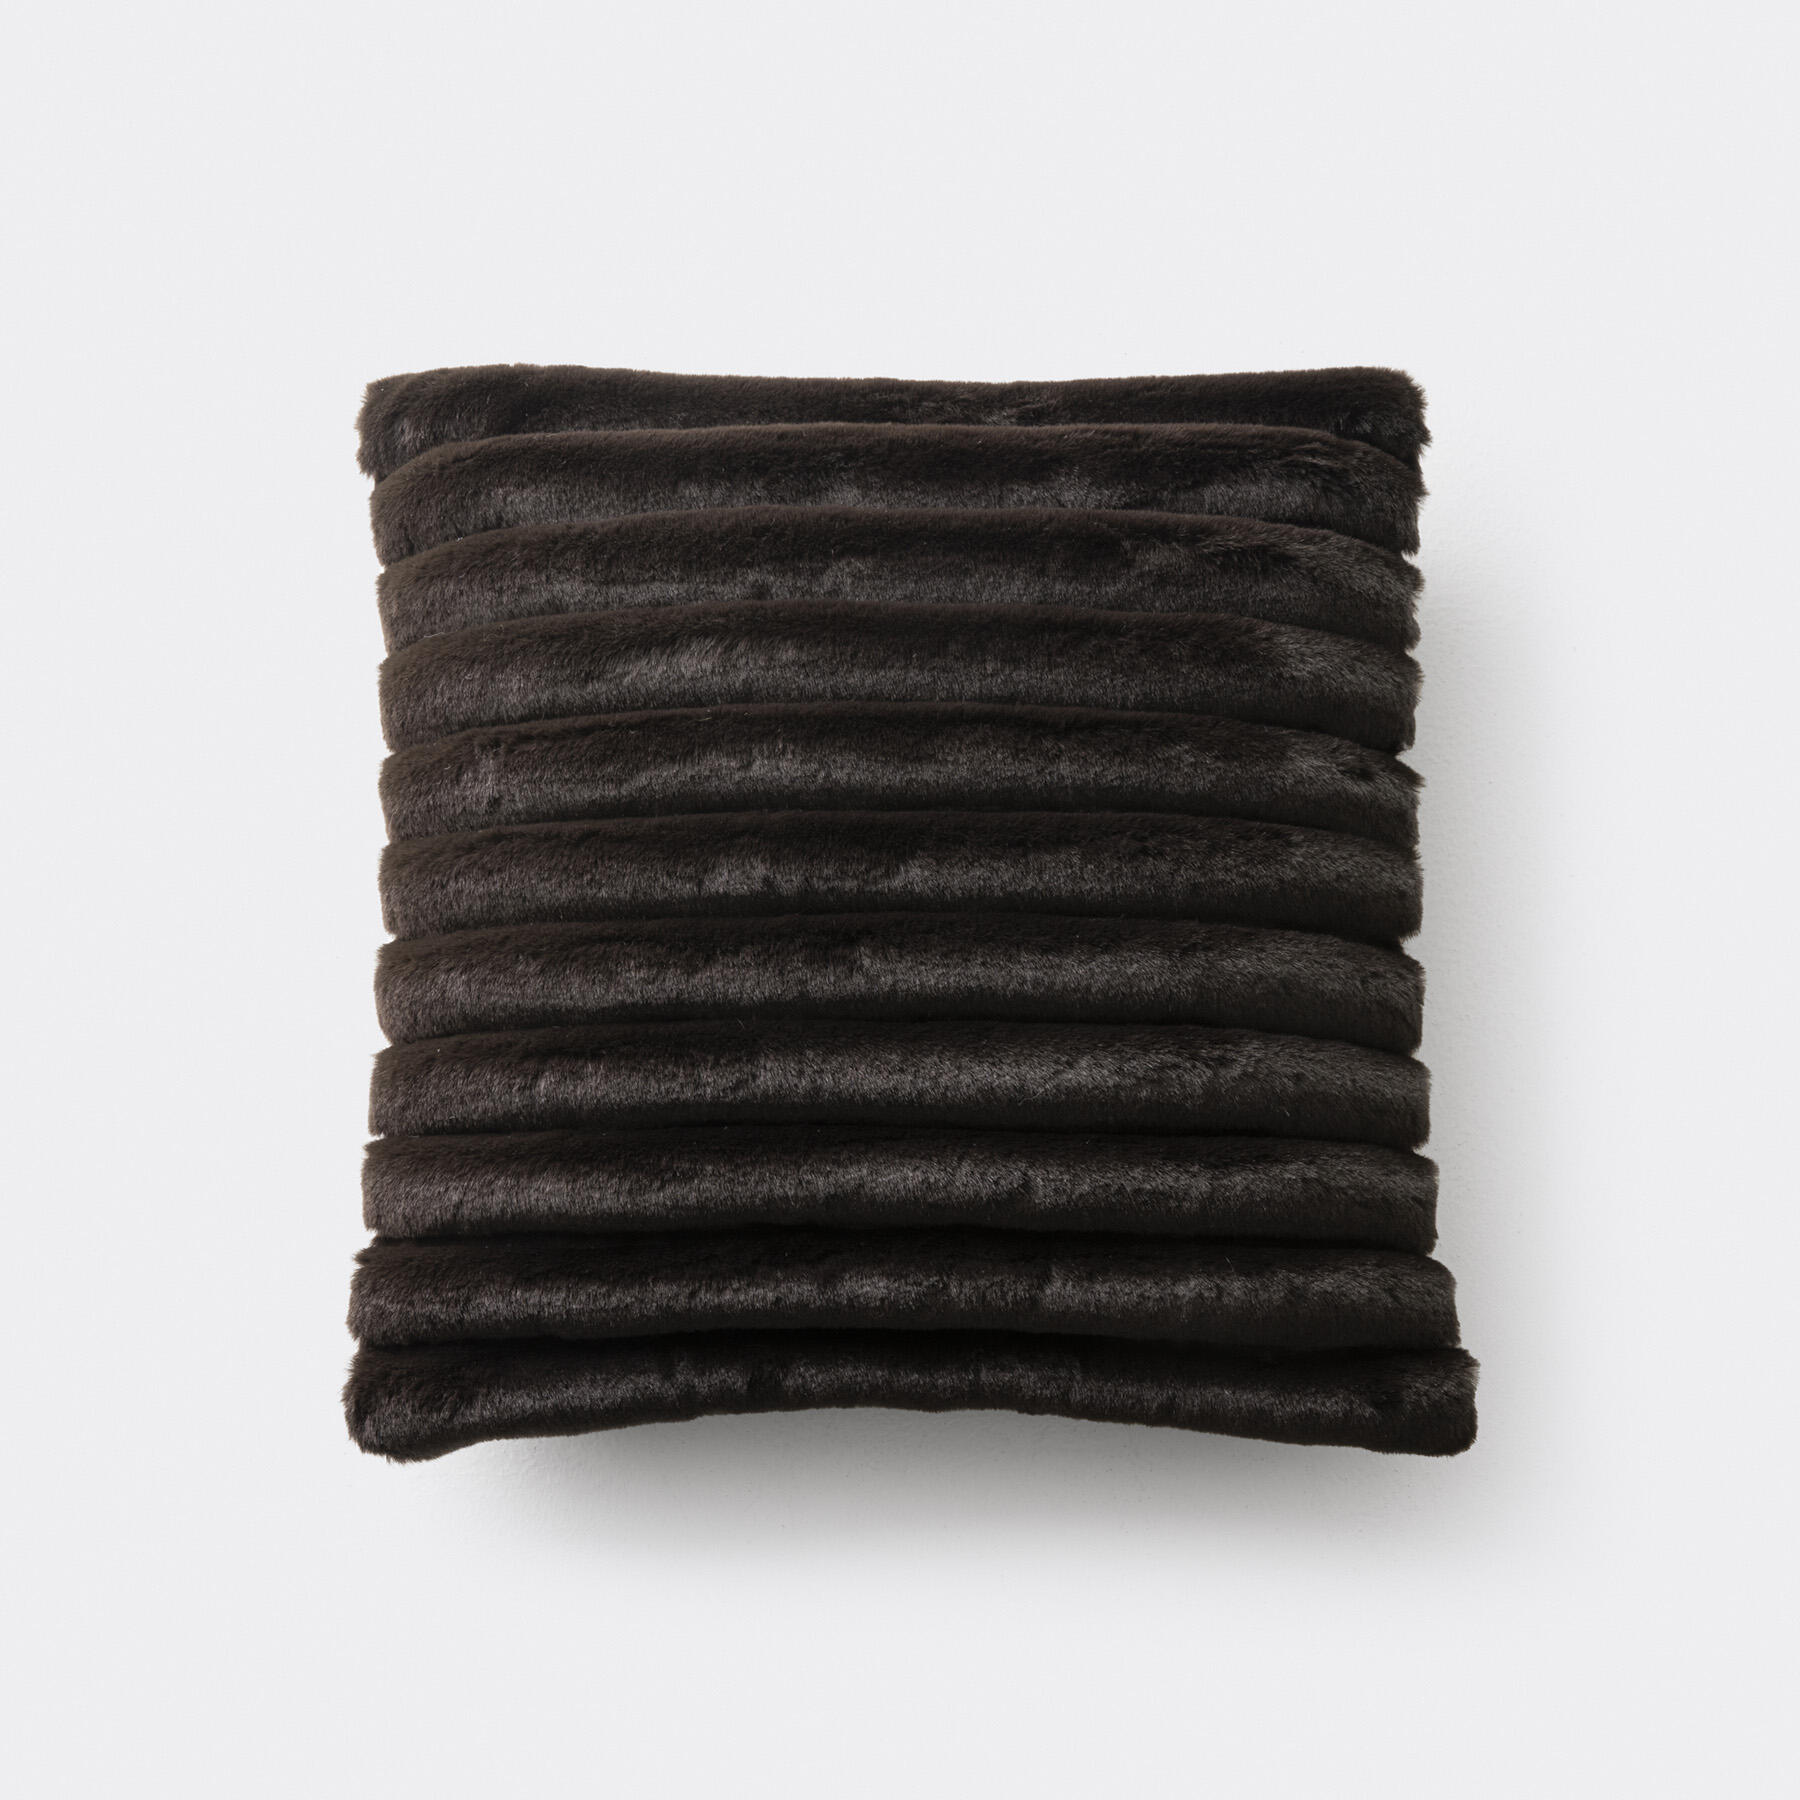 Faux Channeled Pillow, 21x21, Black Sheared Mink